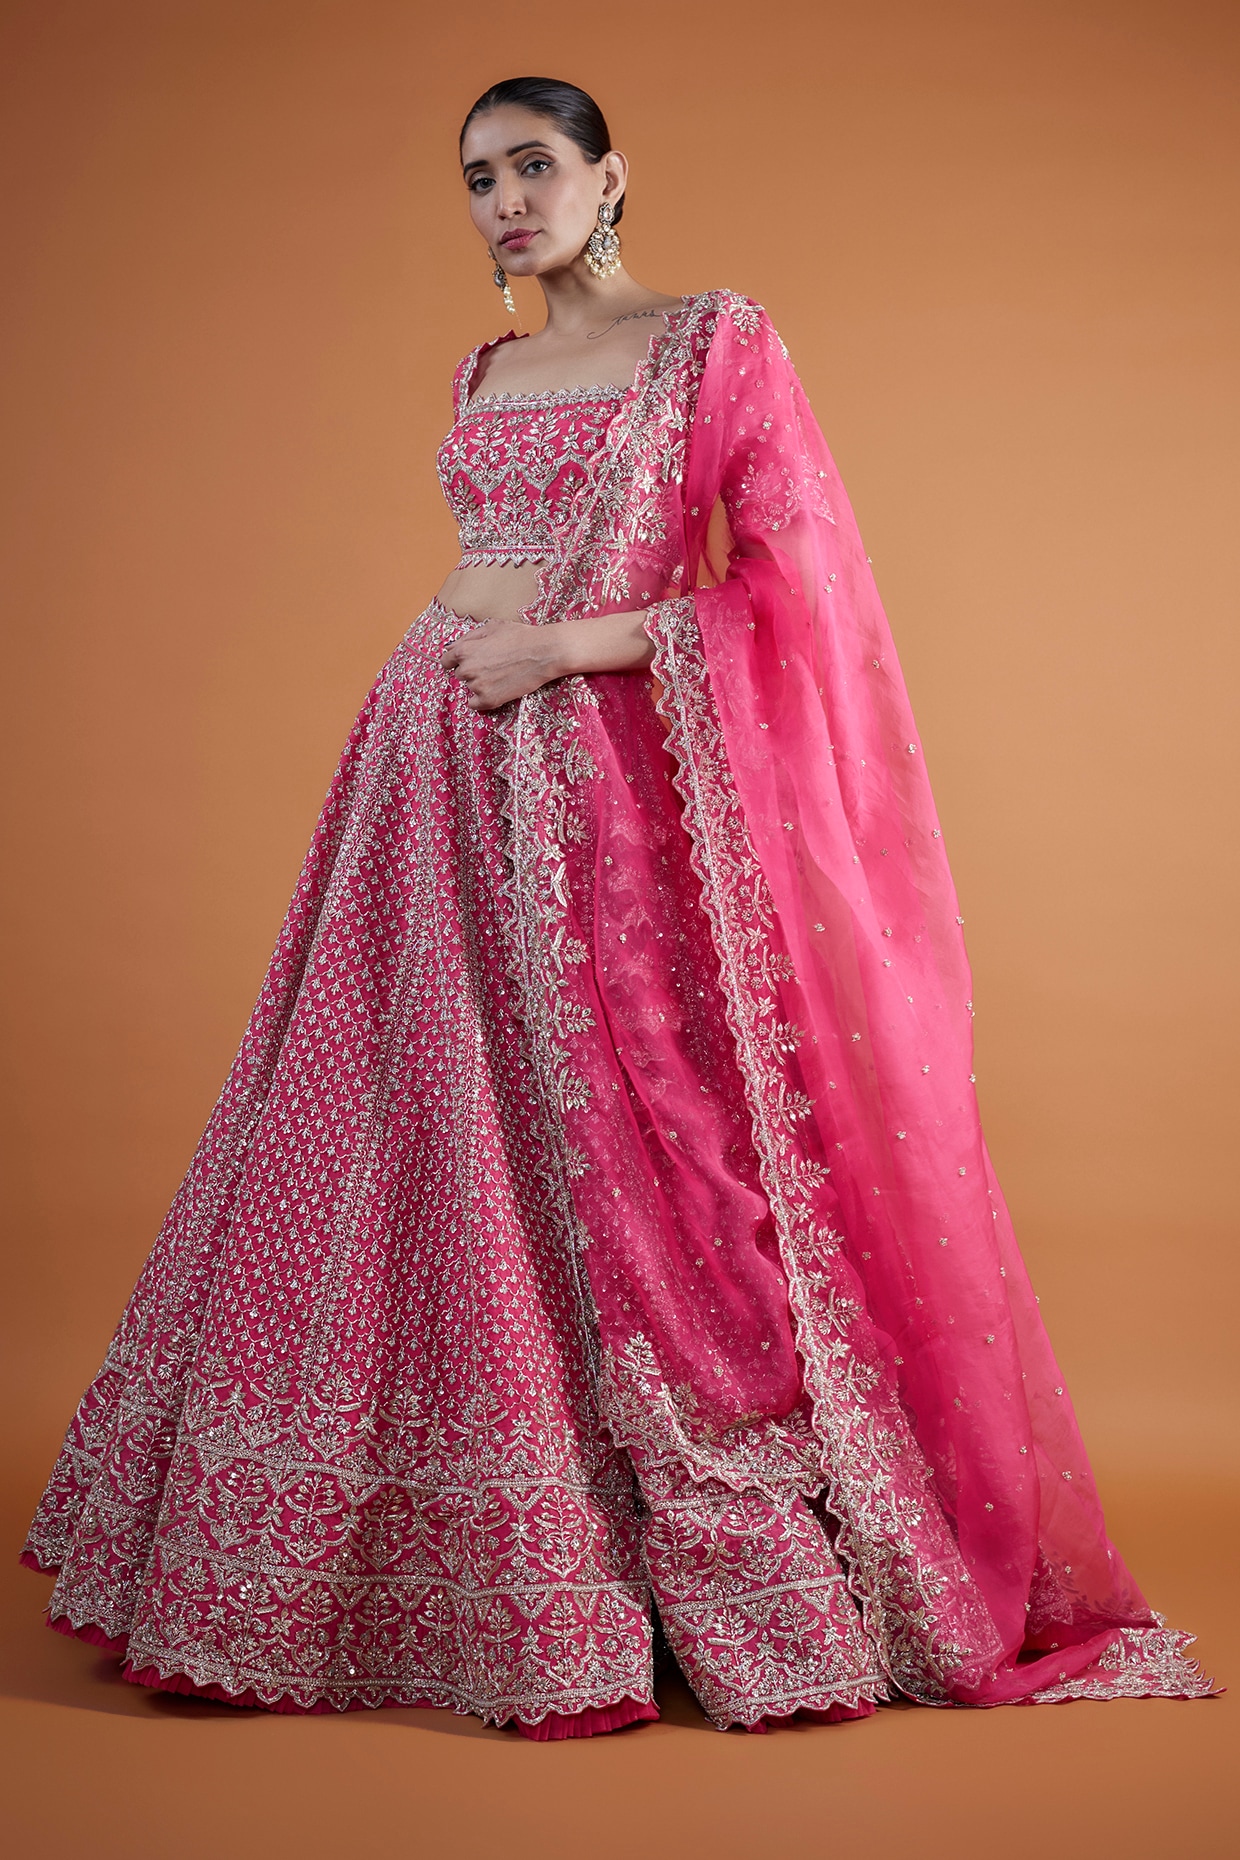 Hot Pink Lehenga Choli with Dupatta - Shafalie's Fashions